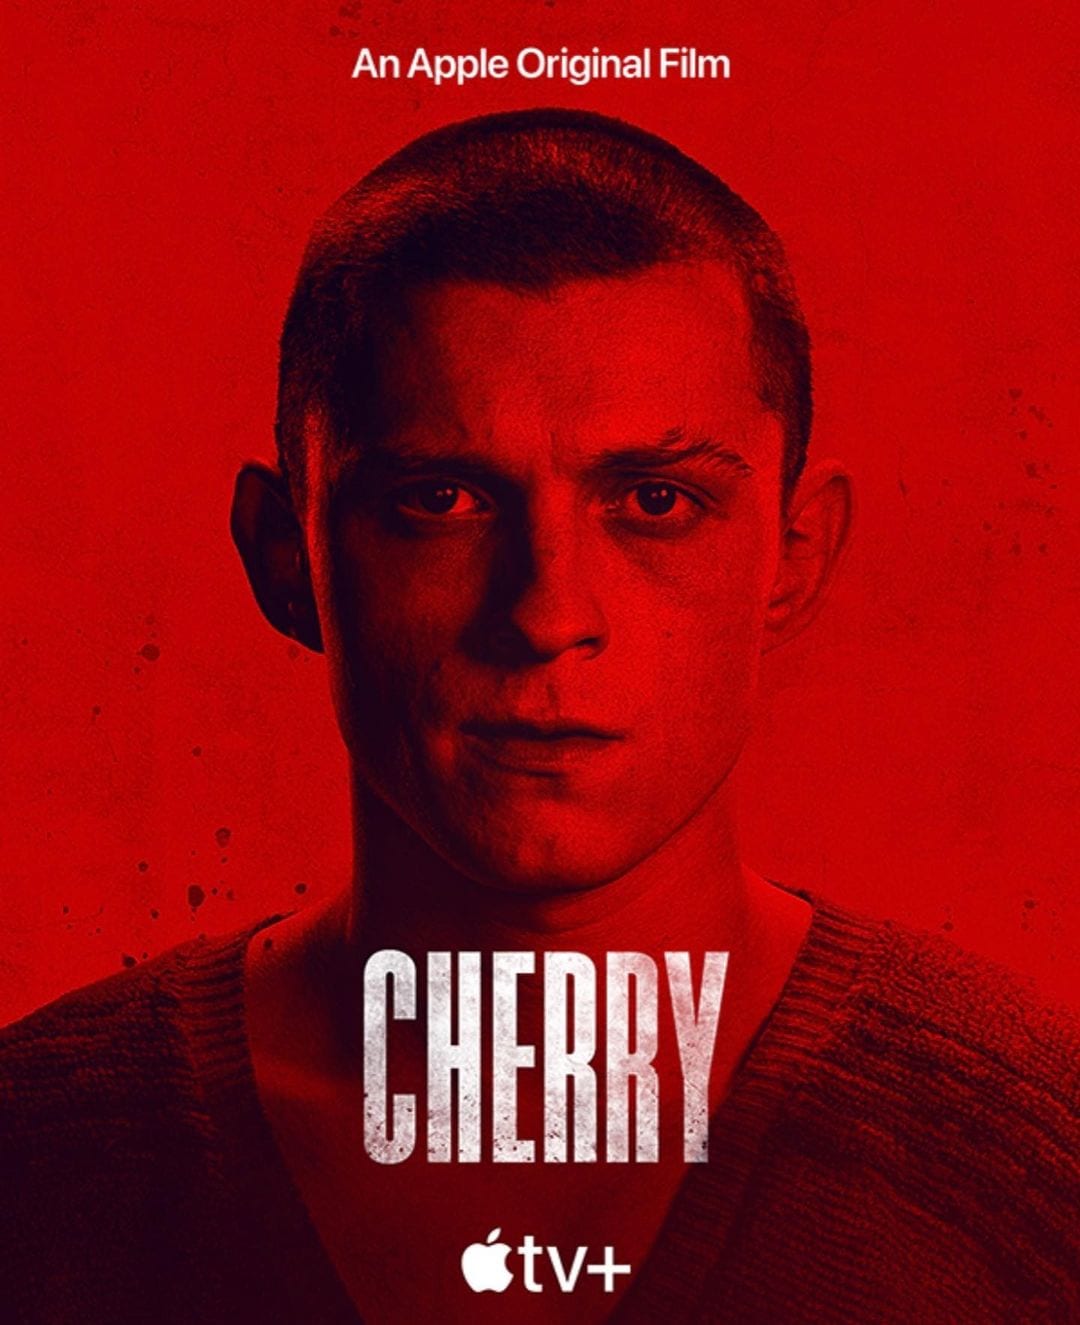 cherry poster 01